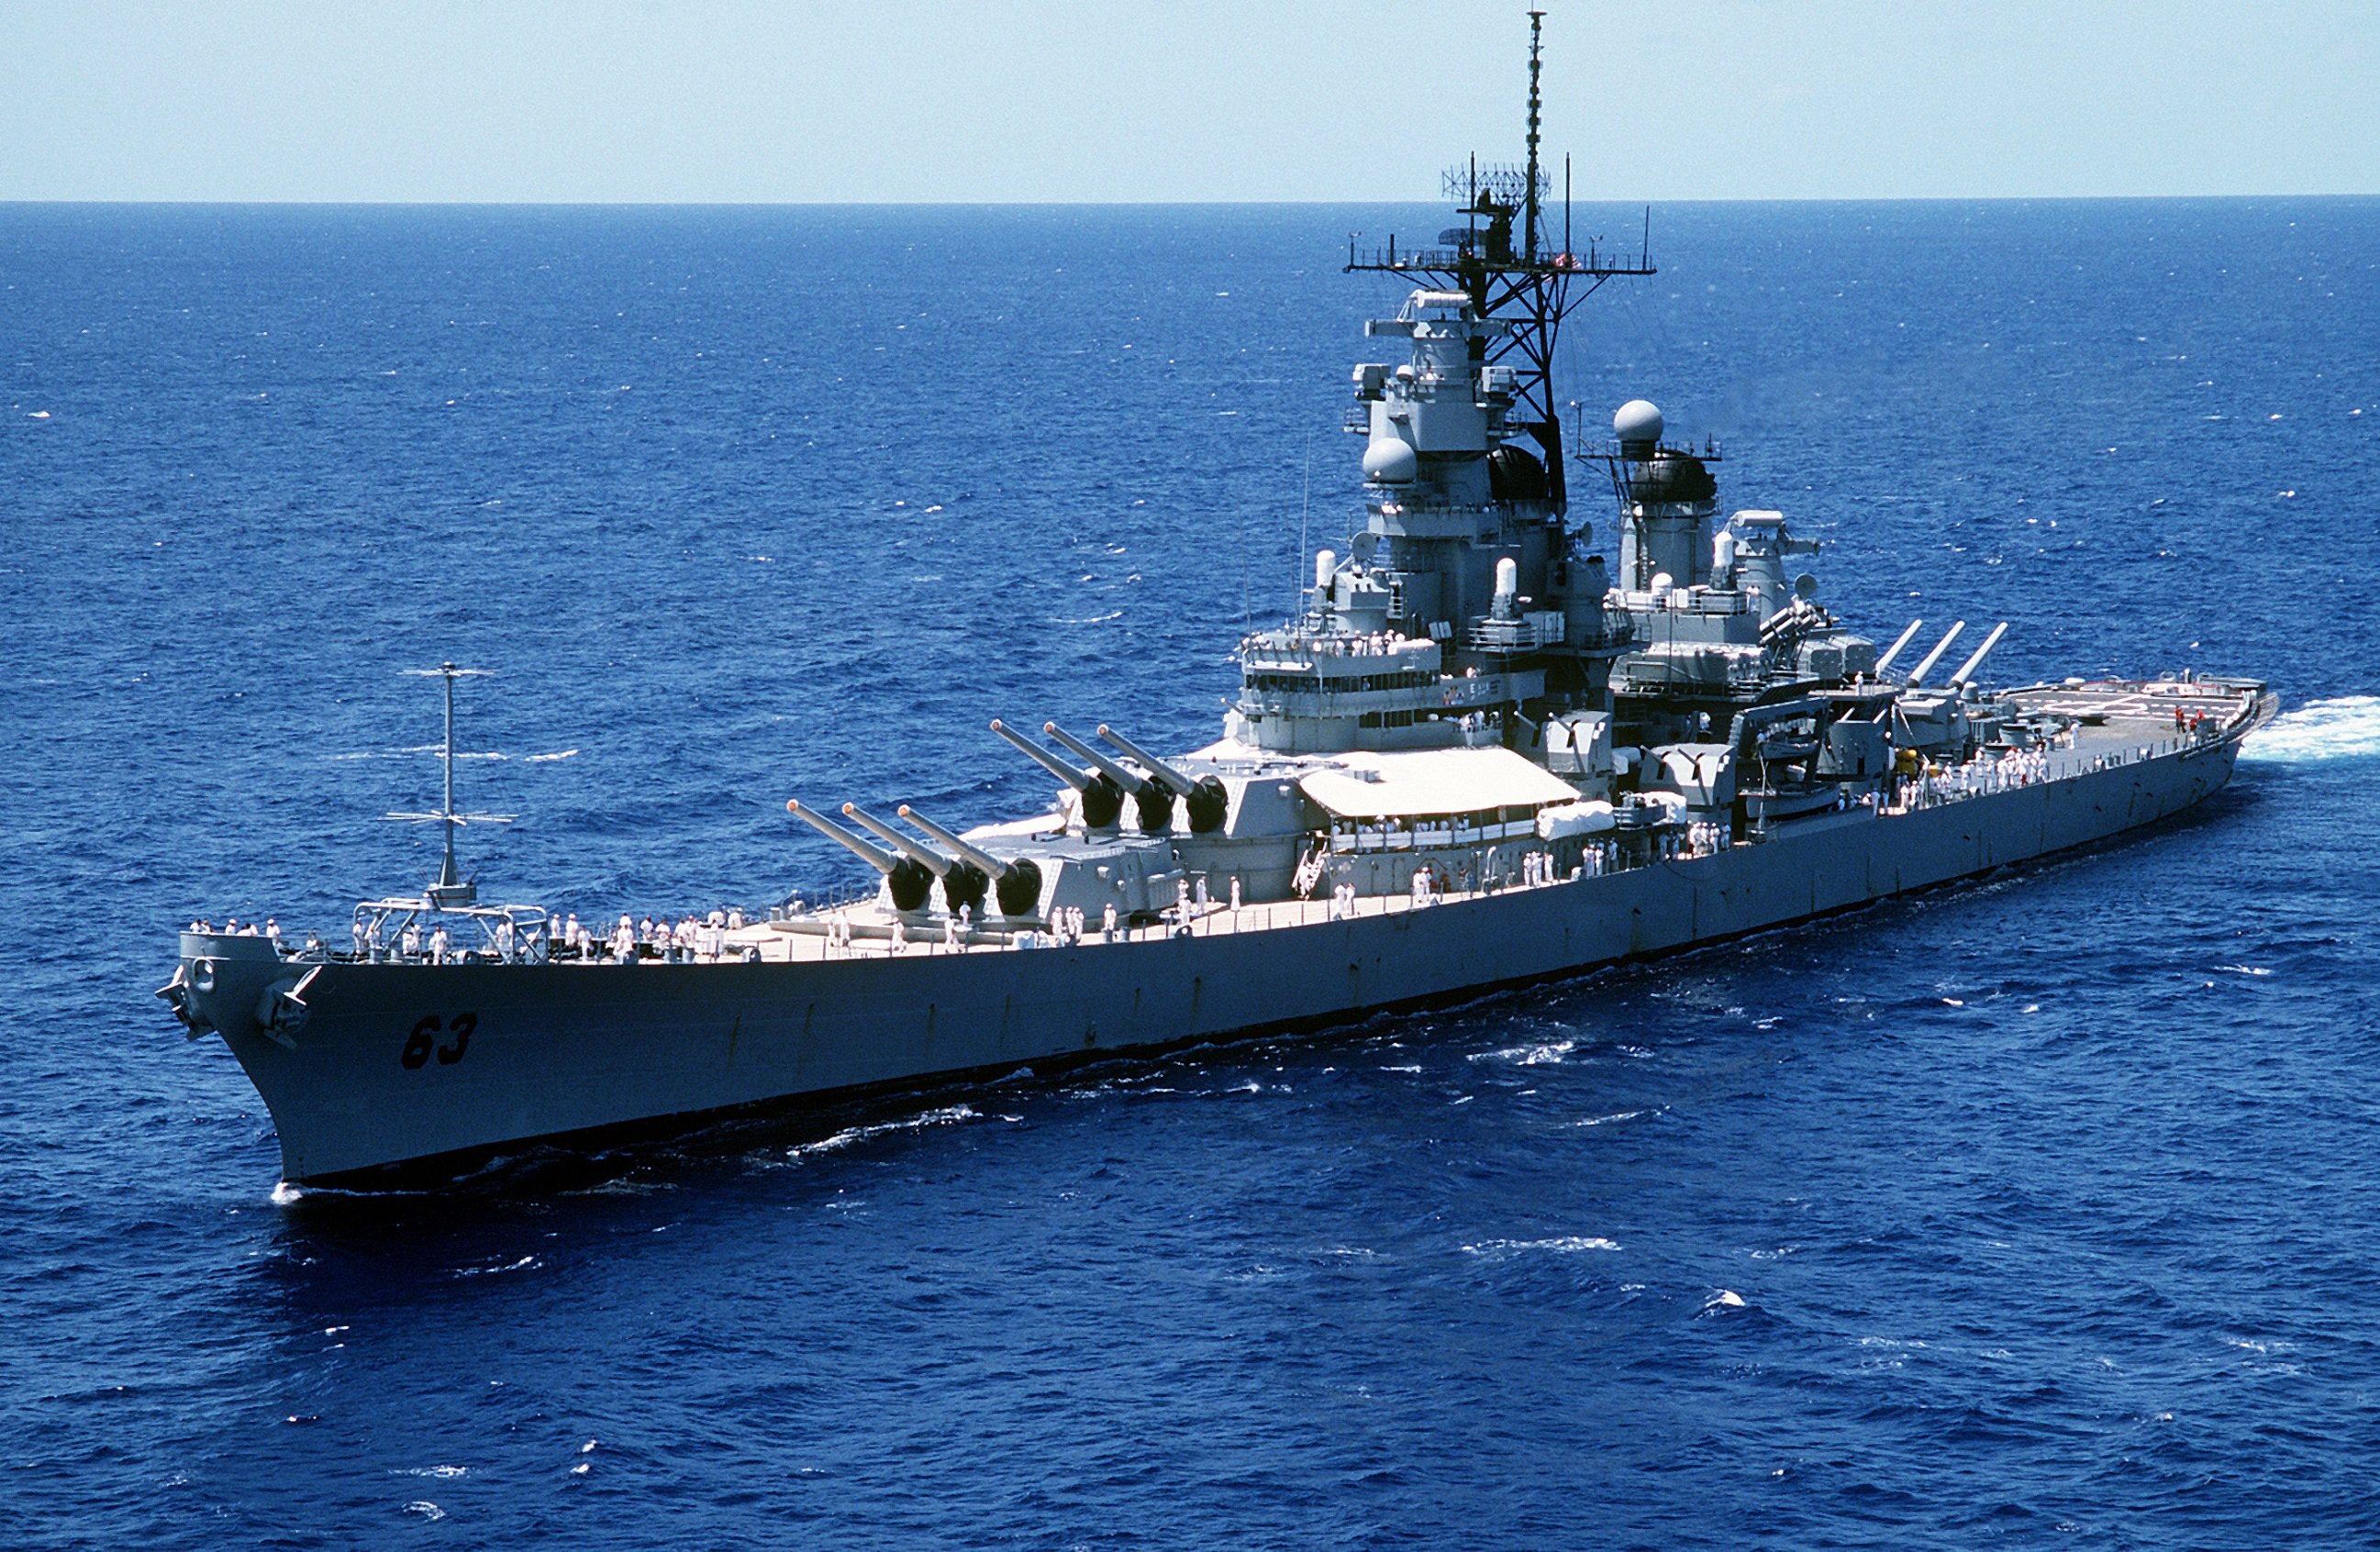 war thunder navy and battleships